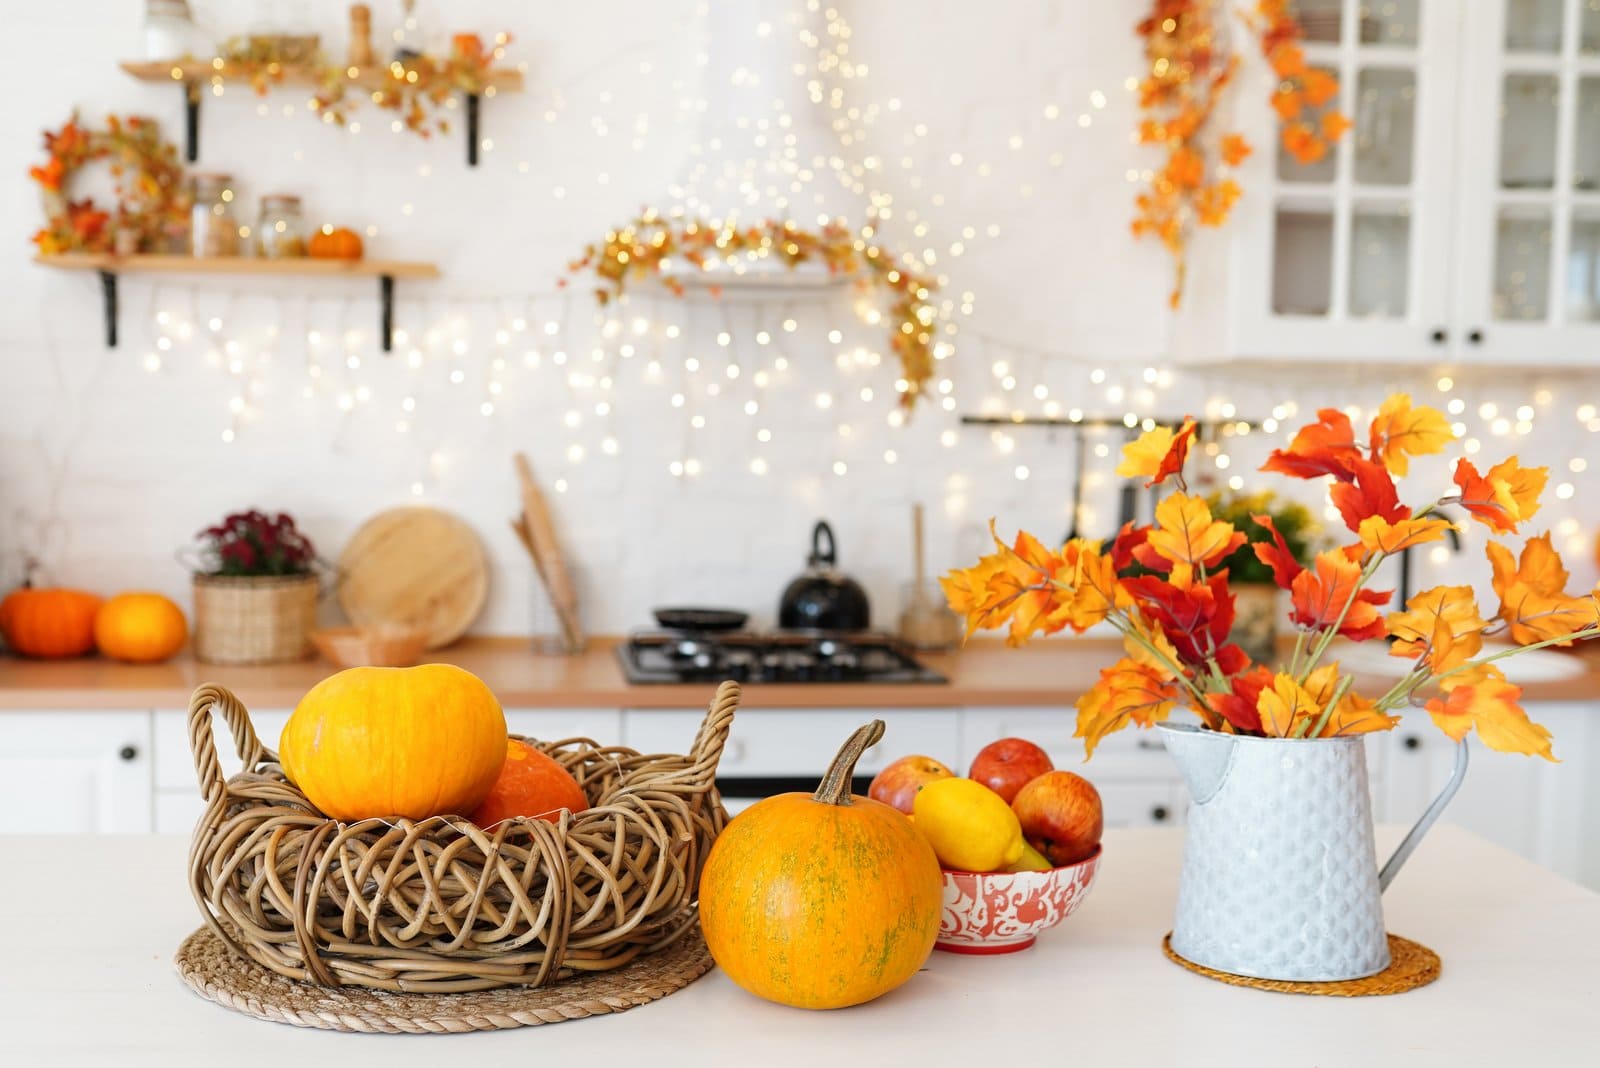 Cozy autumn decor in a kitchen